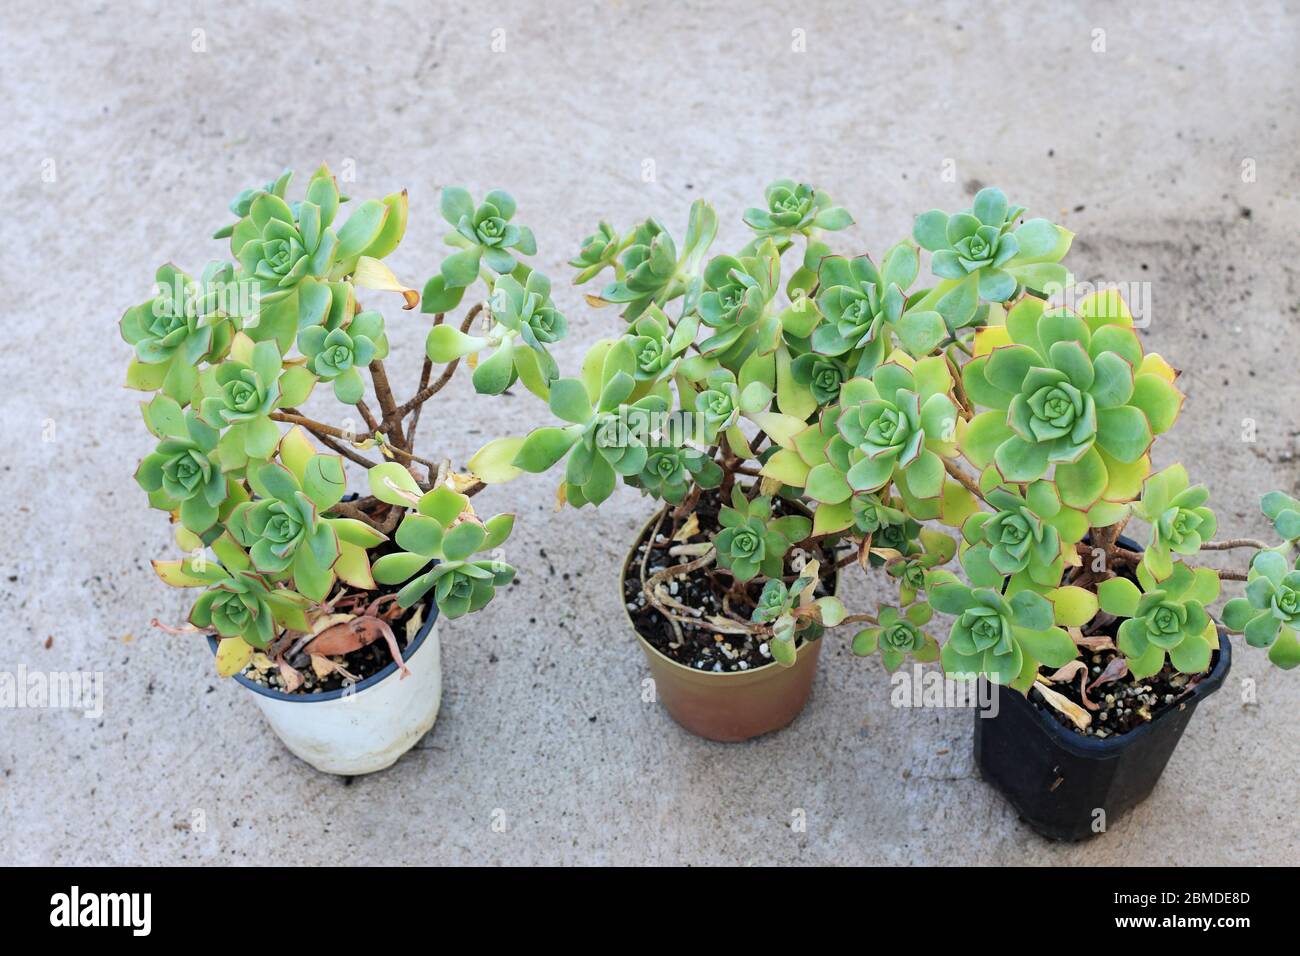 Aeonium haworthii growing in pots Stock Photo